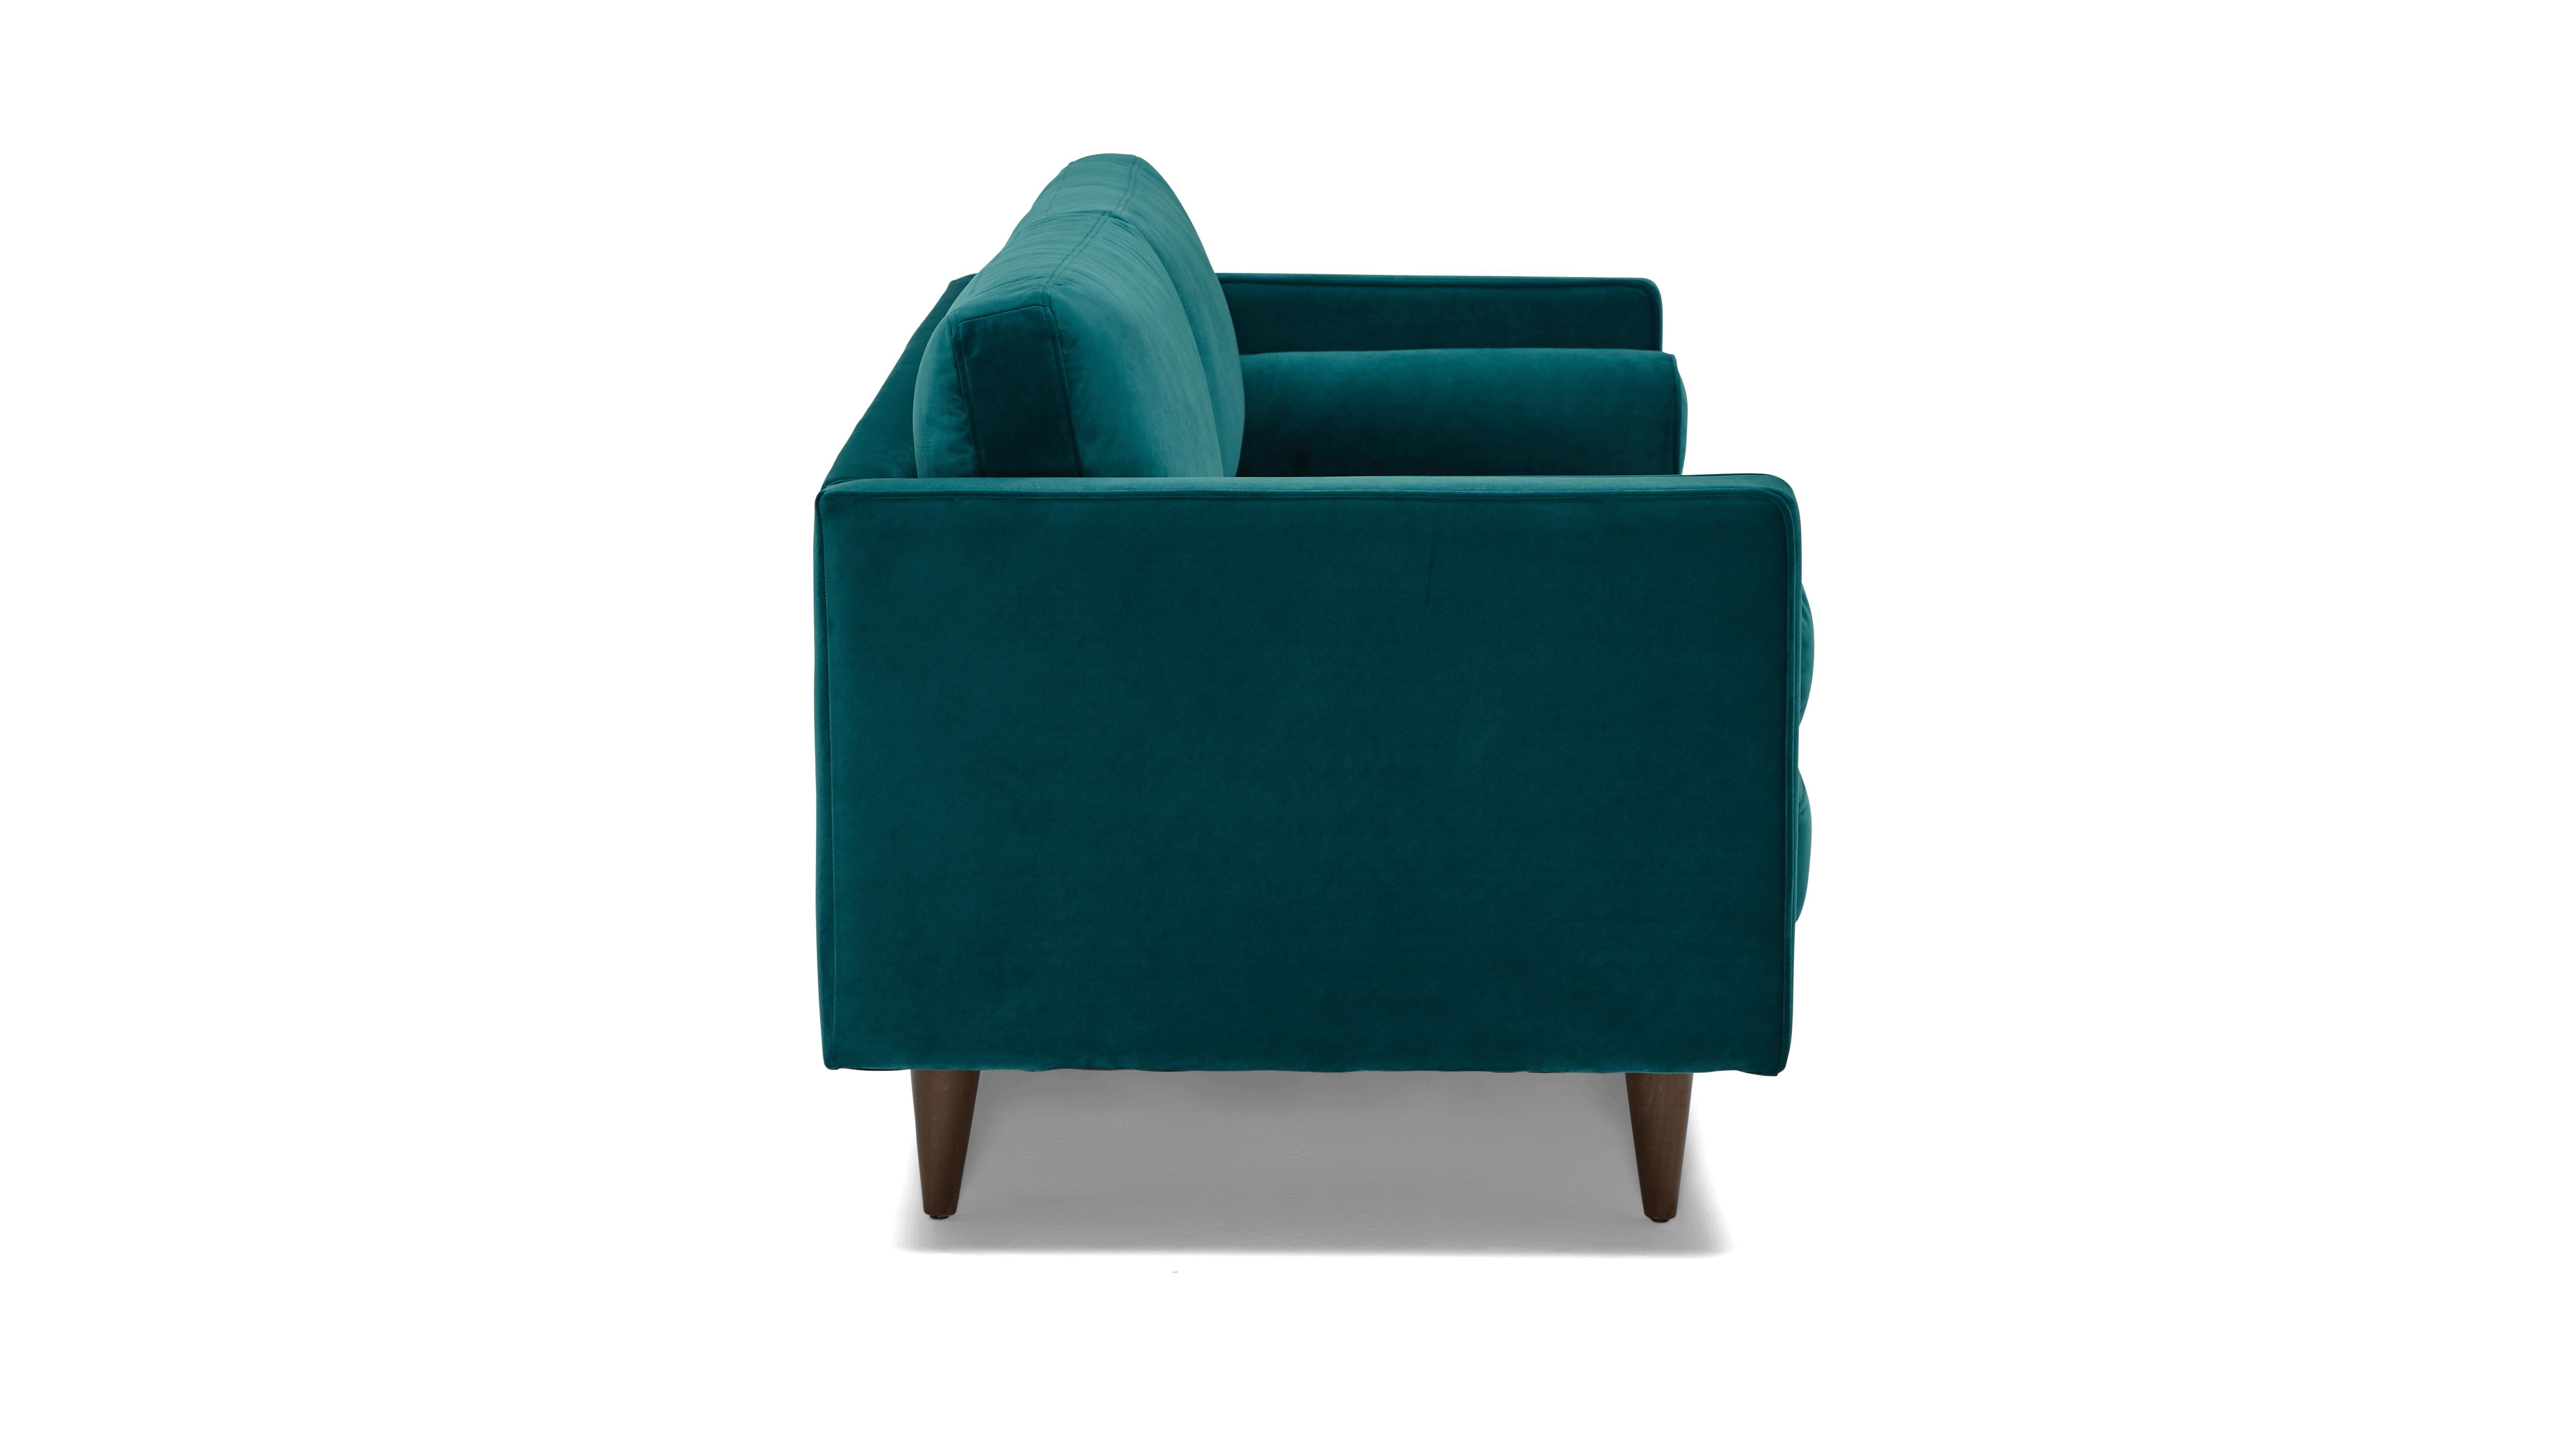 Blue Briar Mid Century Modern Sofa - Royale Peacock - Mocha - Image 2